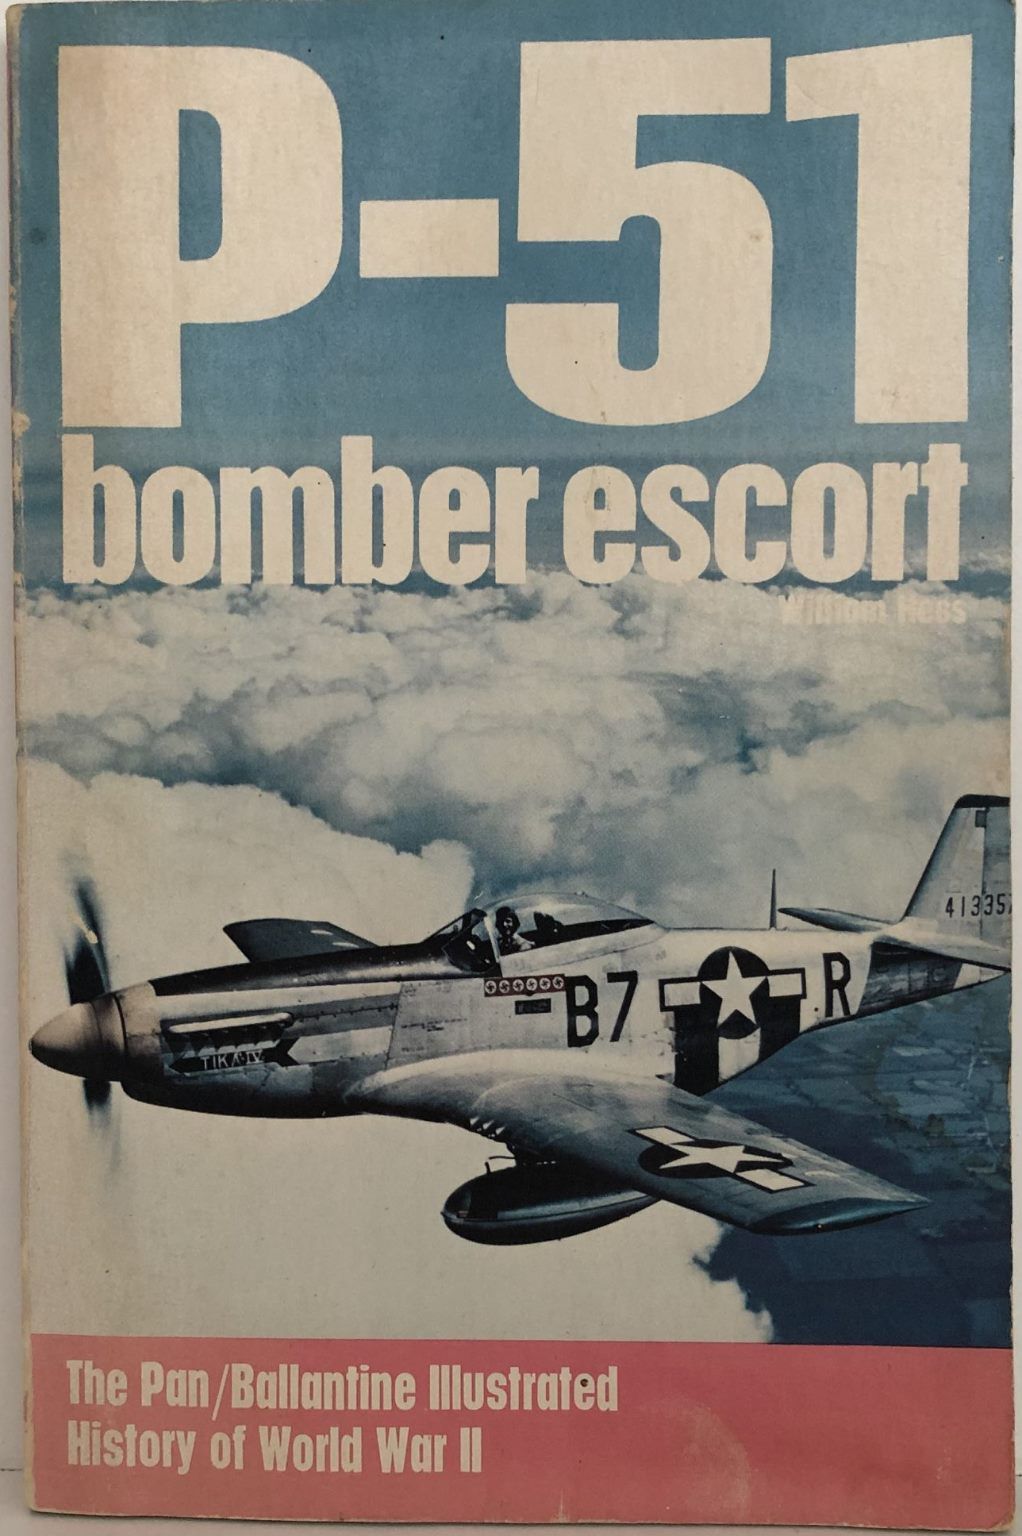 P-51 Bomber Escort